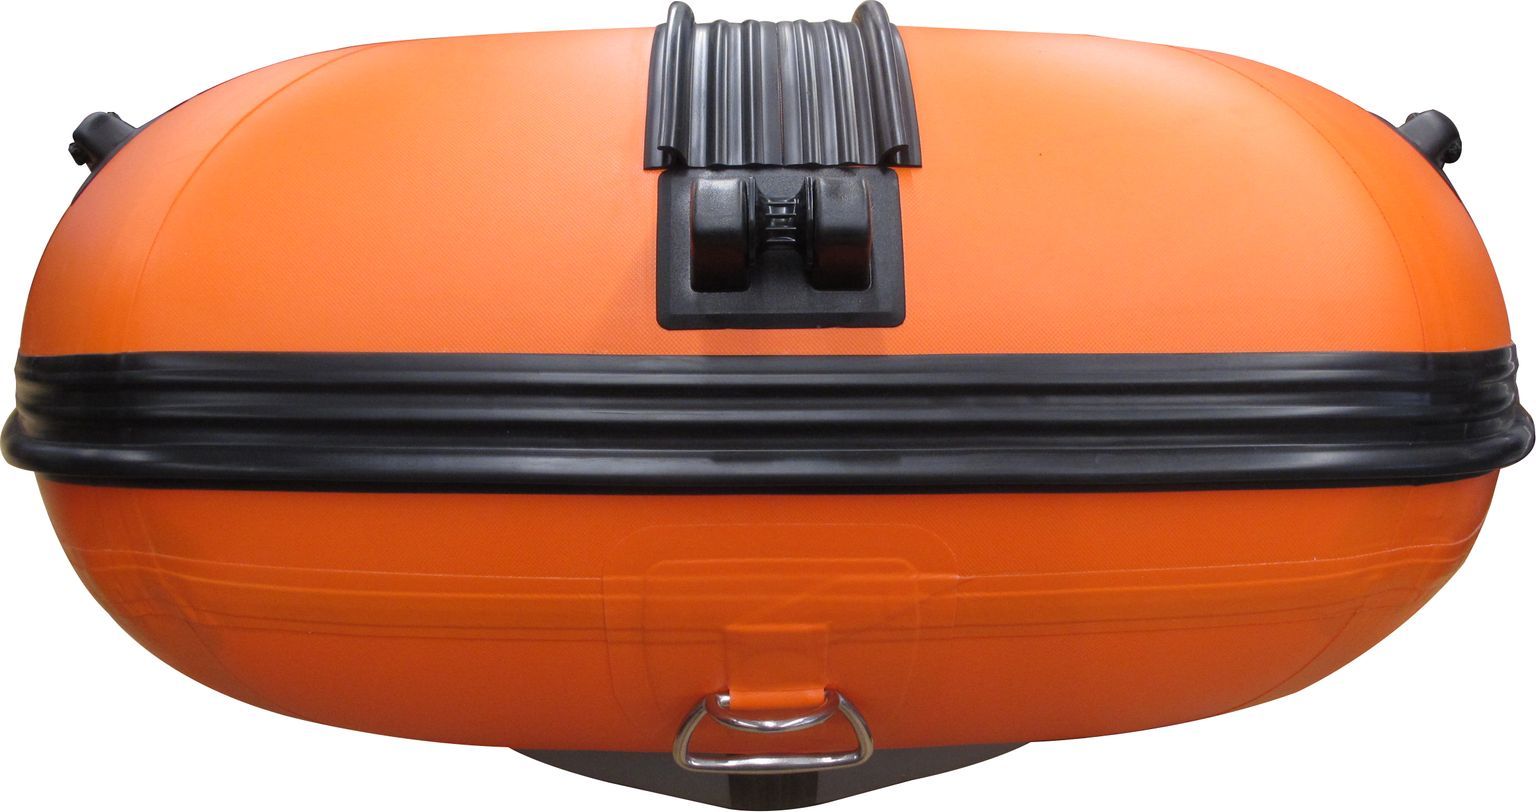 Надувная лодка ПВХ SOLAR-350 К (Оптима), оранжевый SLR350k_opt_orange - фото 3